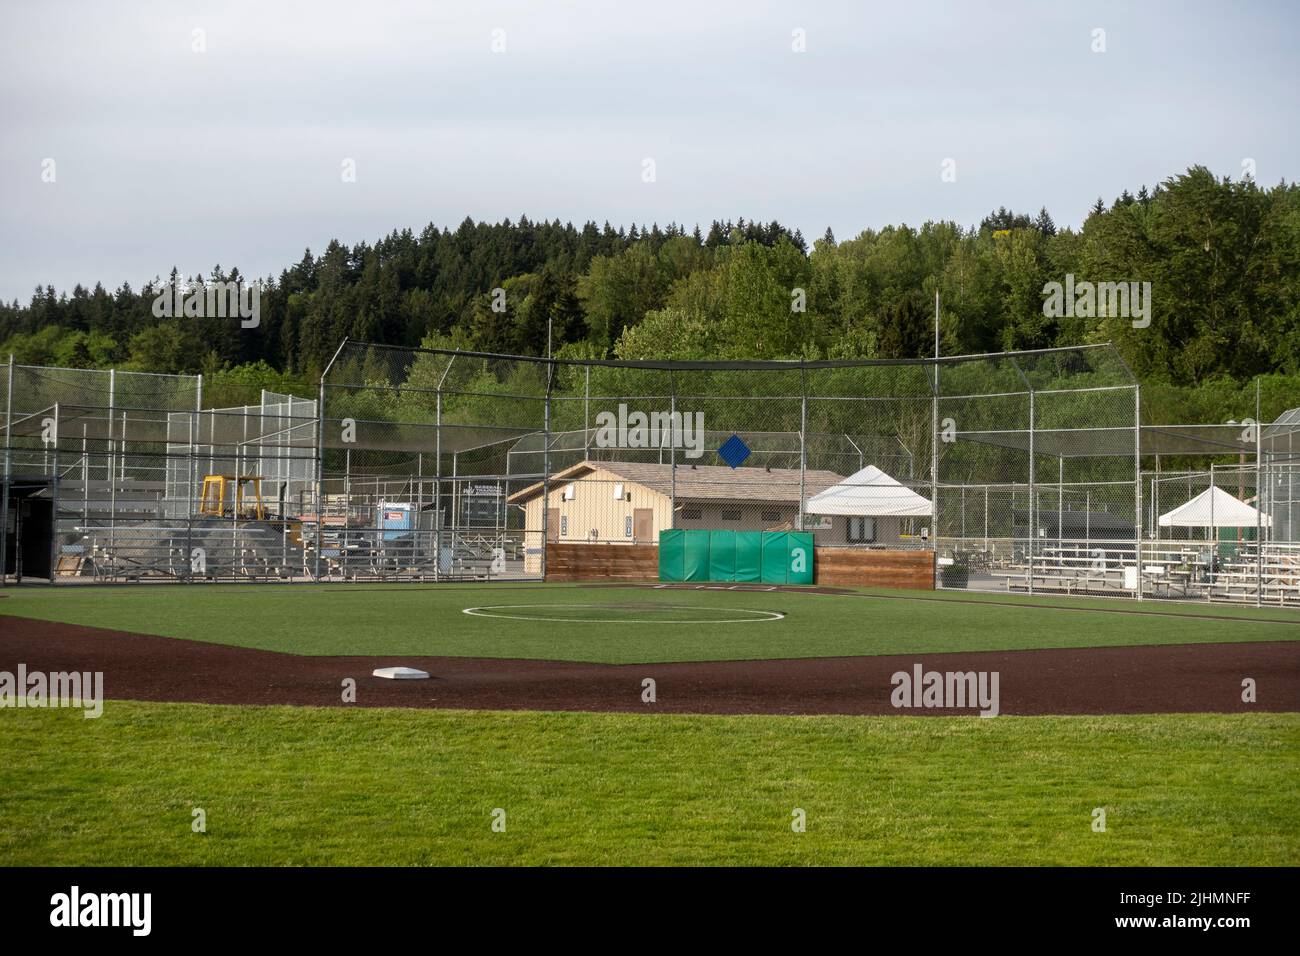 Woodinville, WA USA - circa May 2022: Angled wide view of a baseball field on a bright, sunny day Stock Photo